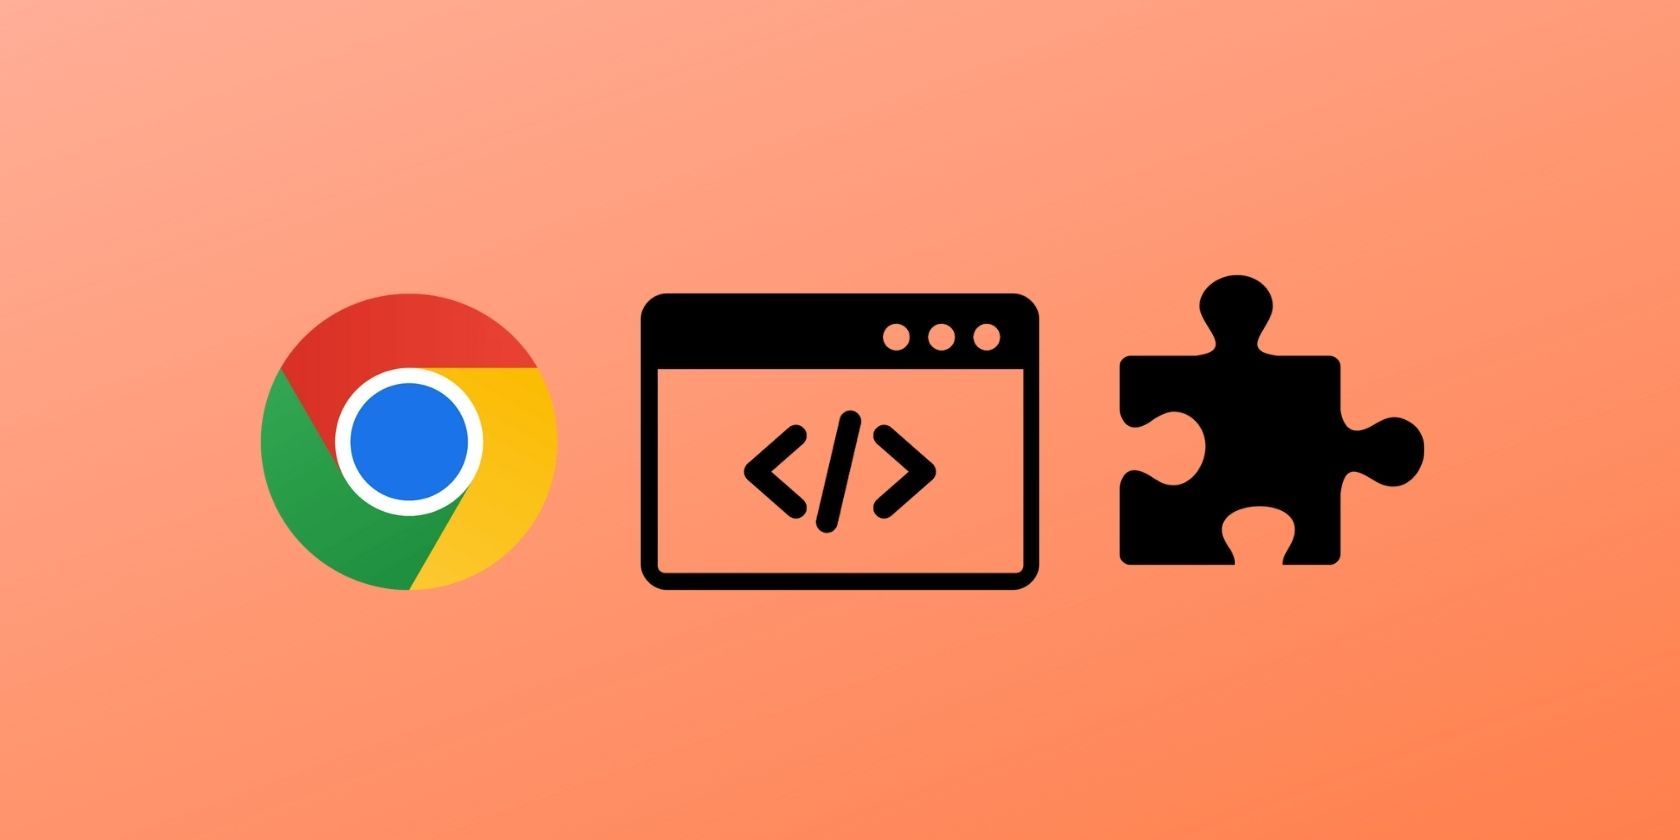 Google Chrome logo, programming icon, and puzzle piece icon on an orange gradient